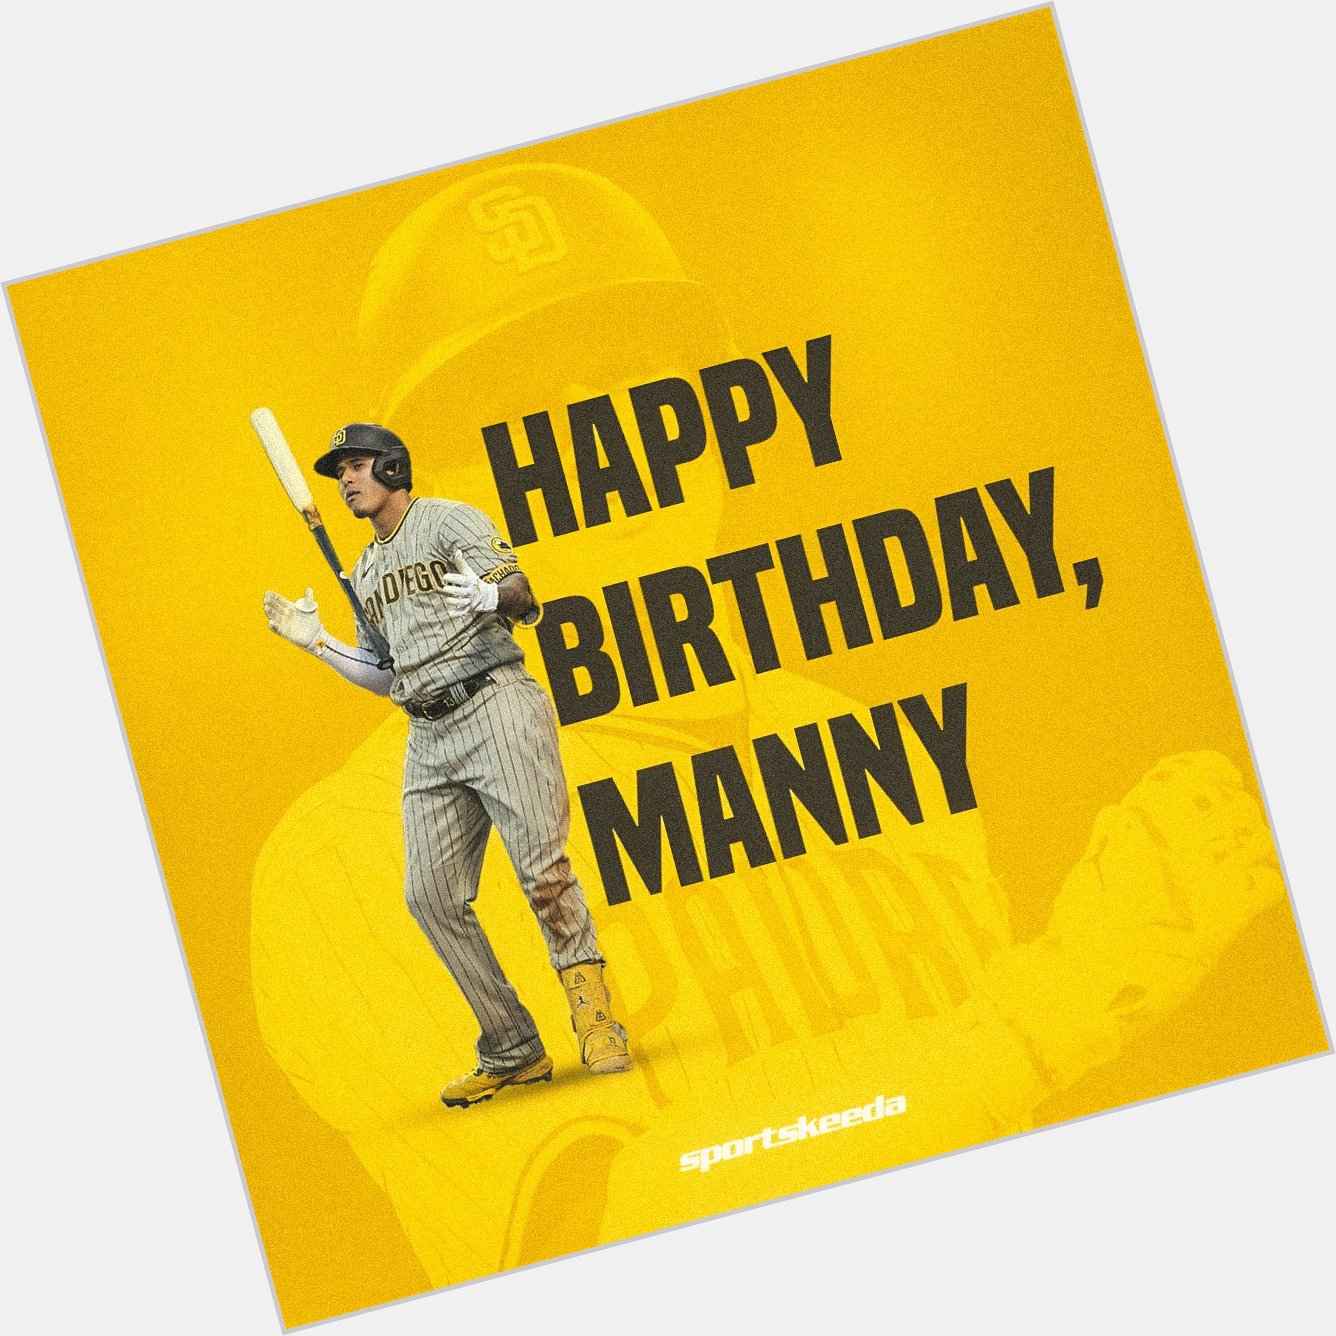 Happy Birthday Manny Machado.  5x All-Star 2x Gold Glove Silver Slugger Platinum Glove 